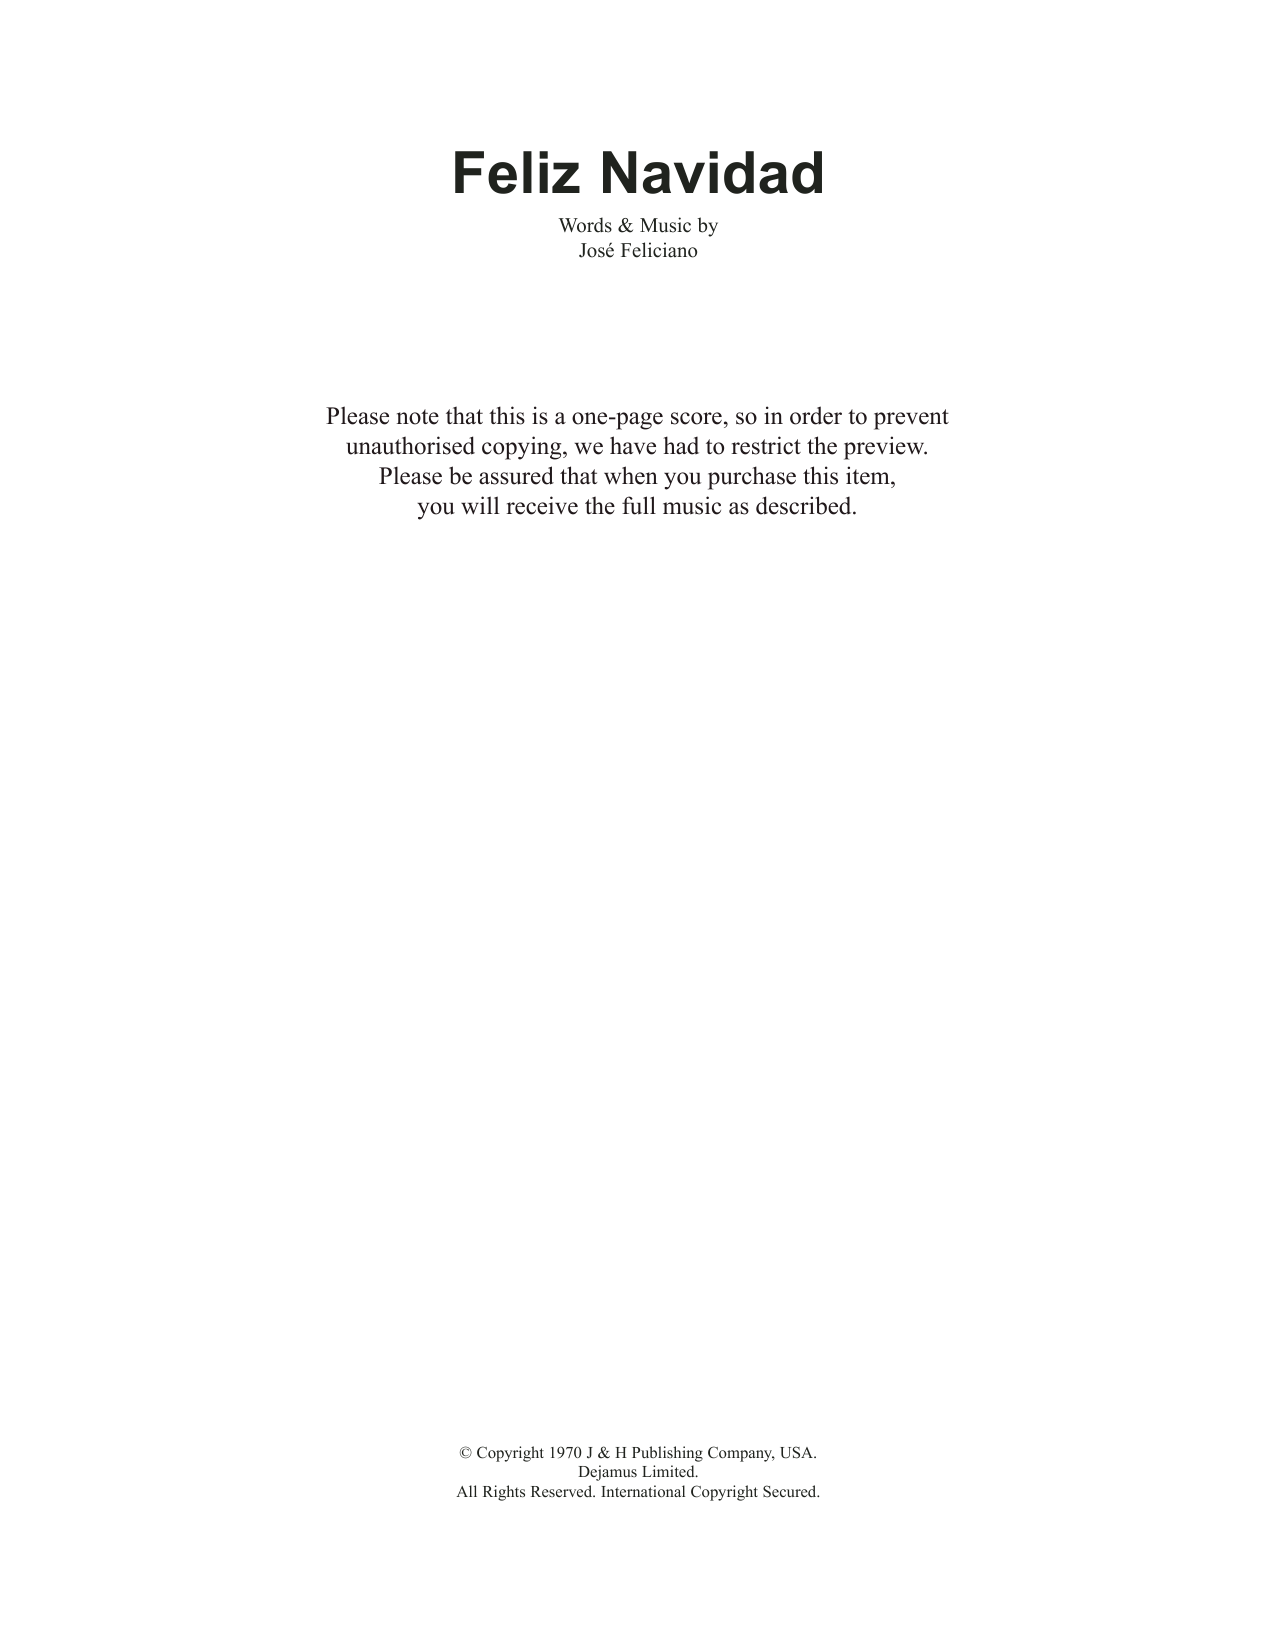 Jose Feliciano Feliz Navidad Sheet Music Notes & Chords for Ukulele - Download or Print PDF